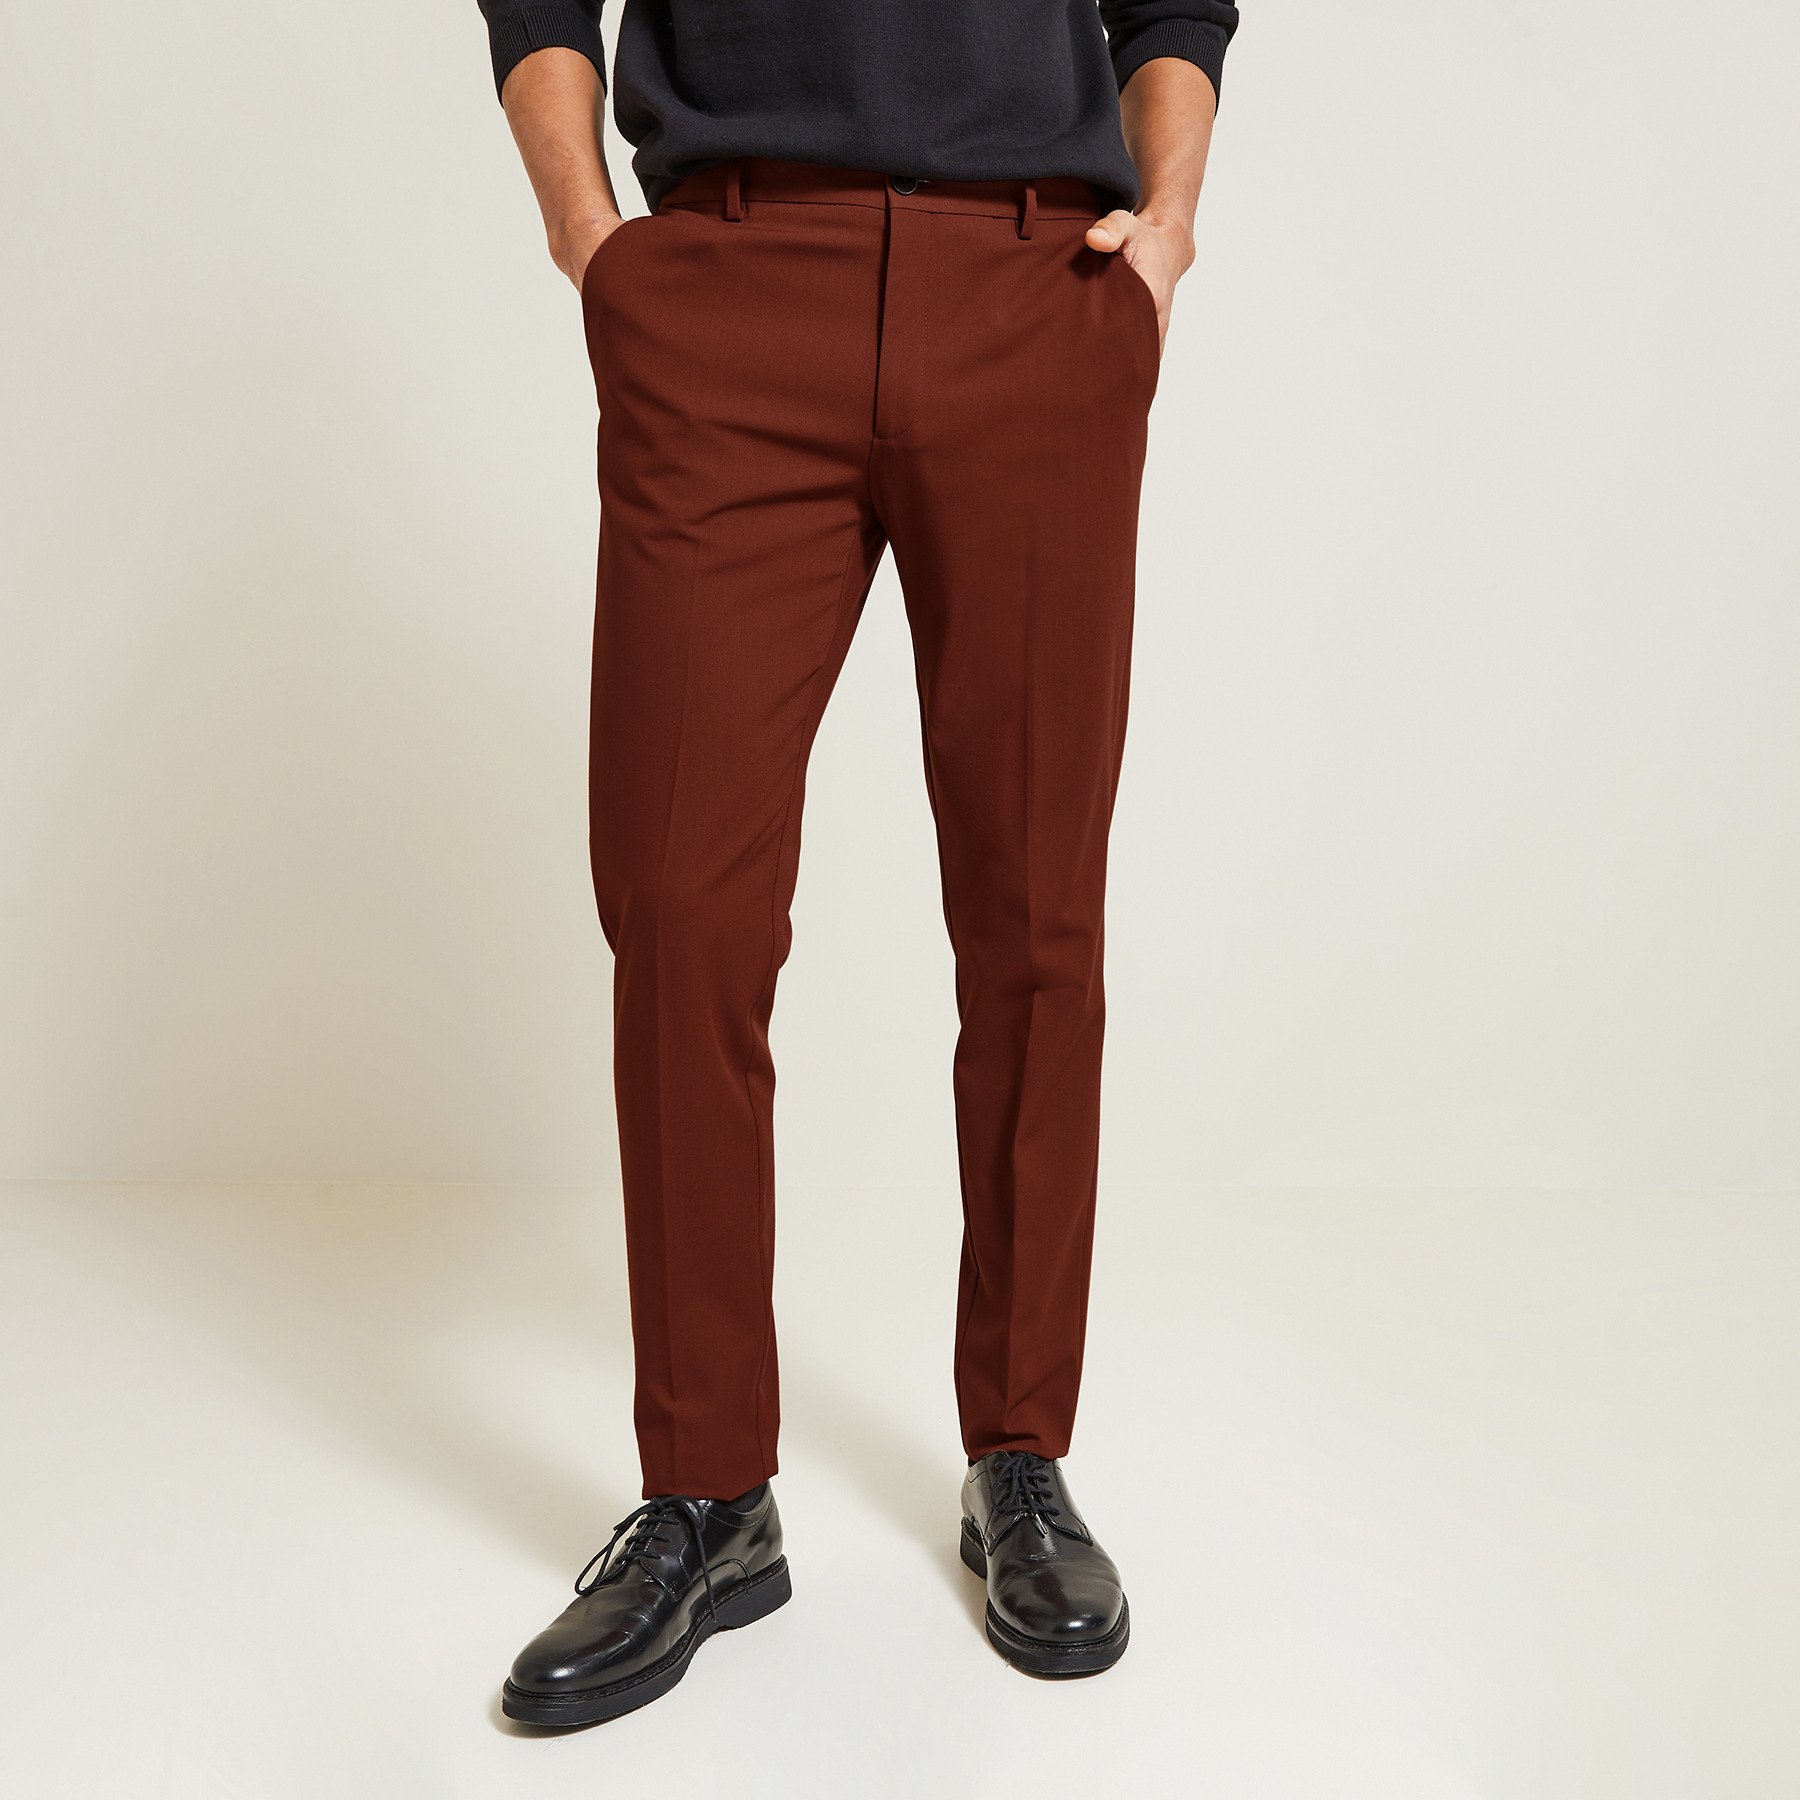 Pantalon de costume extra slim Rouge 36 66% Polyester, 28% Viscose, 6% Elasthanne Homme Brice